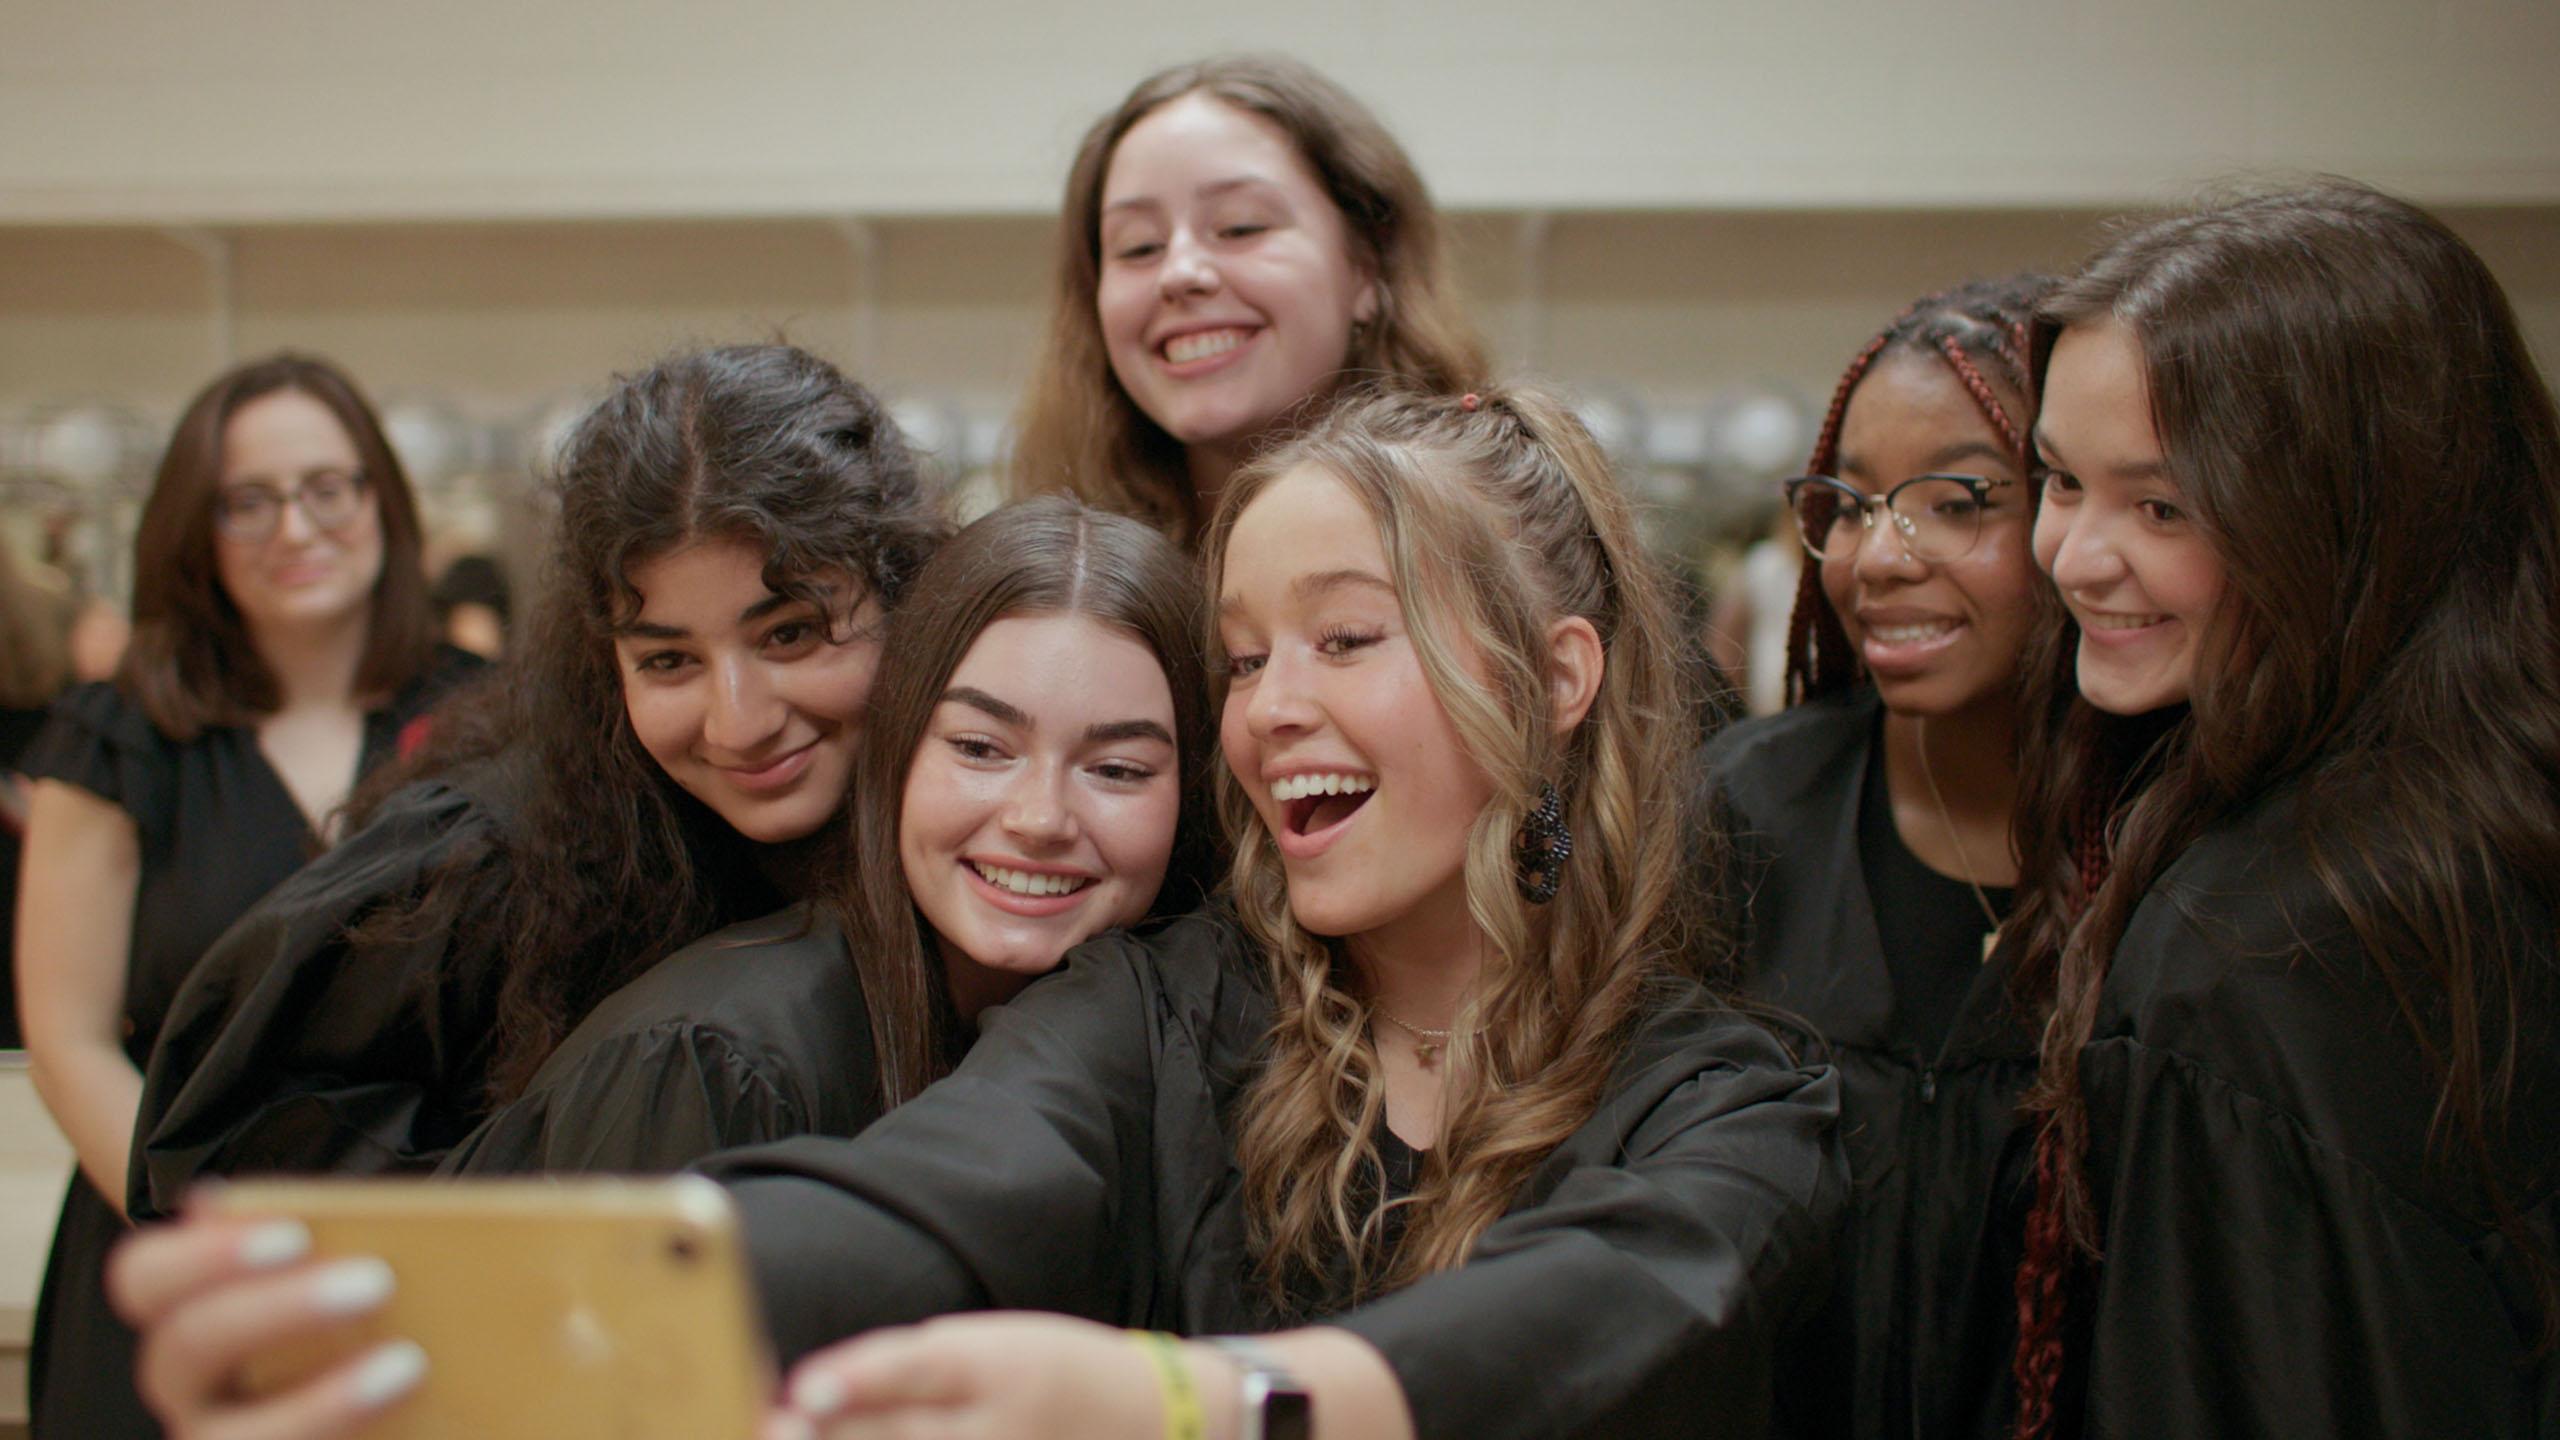 Apple Original Films celebrates the world premiere of “Girls State” at Sundance Film Festival